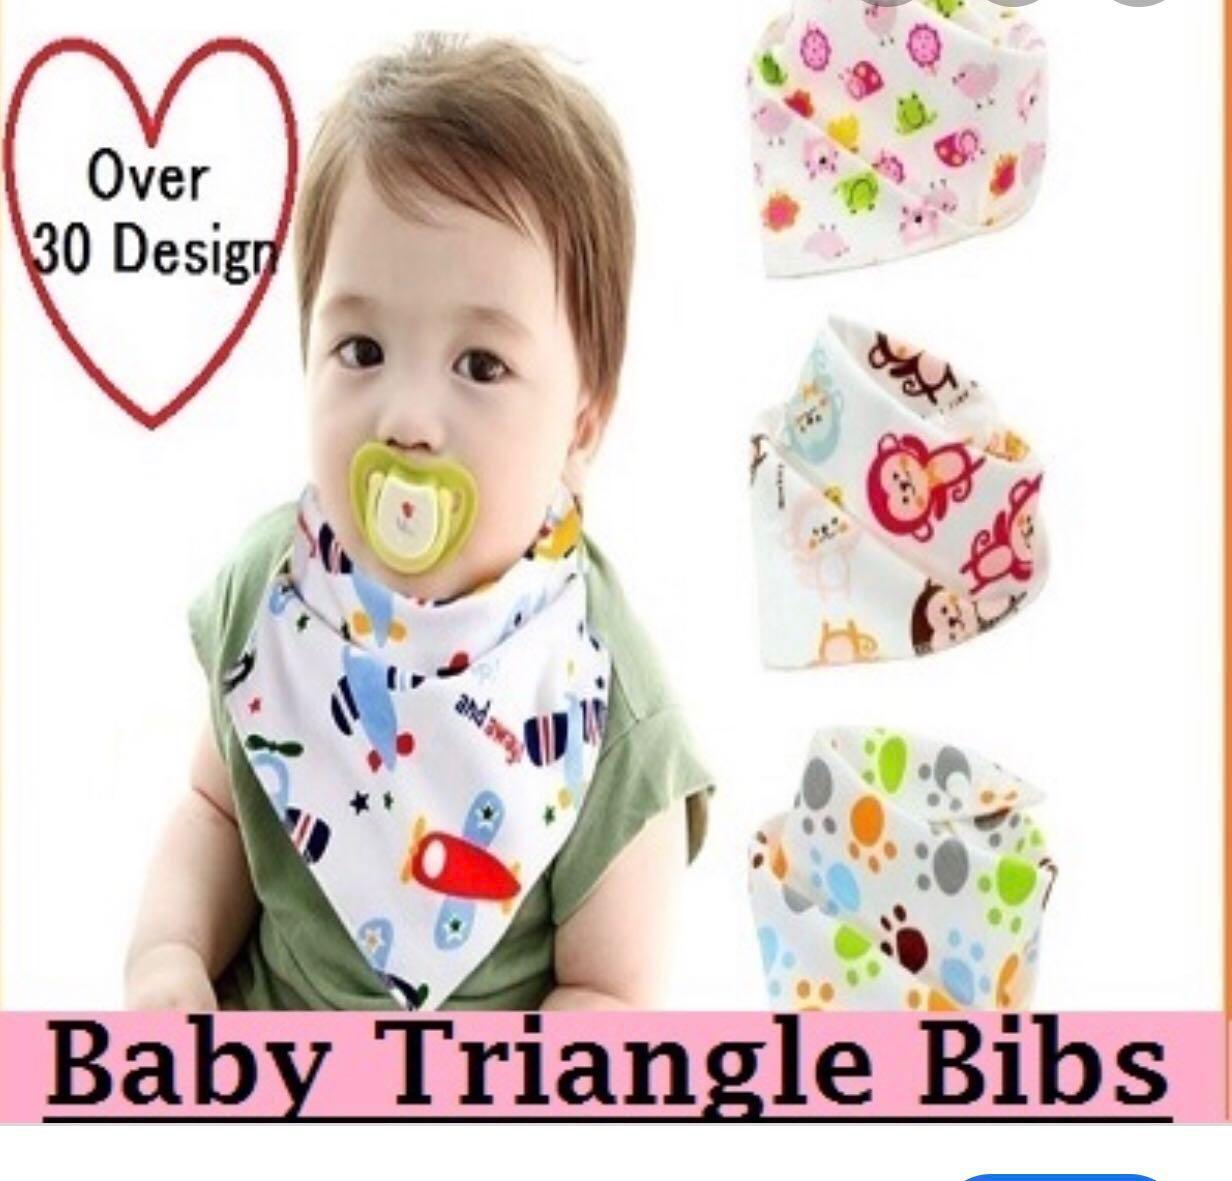 triangular bibs for babies